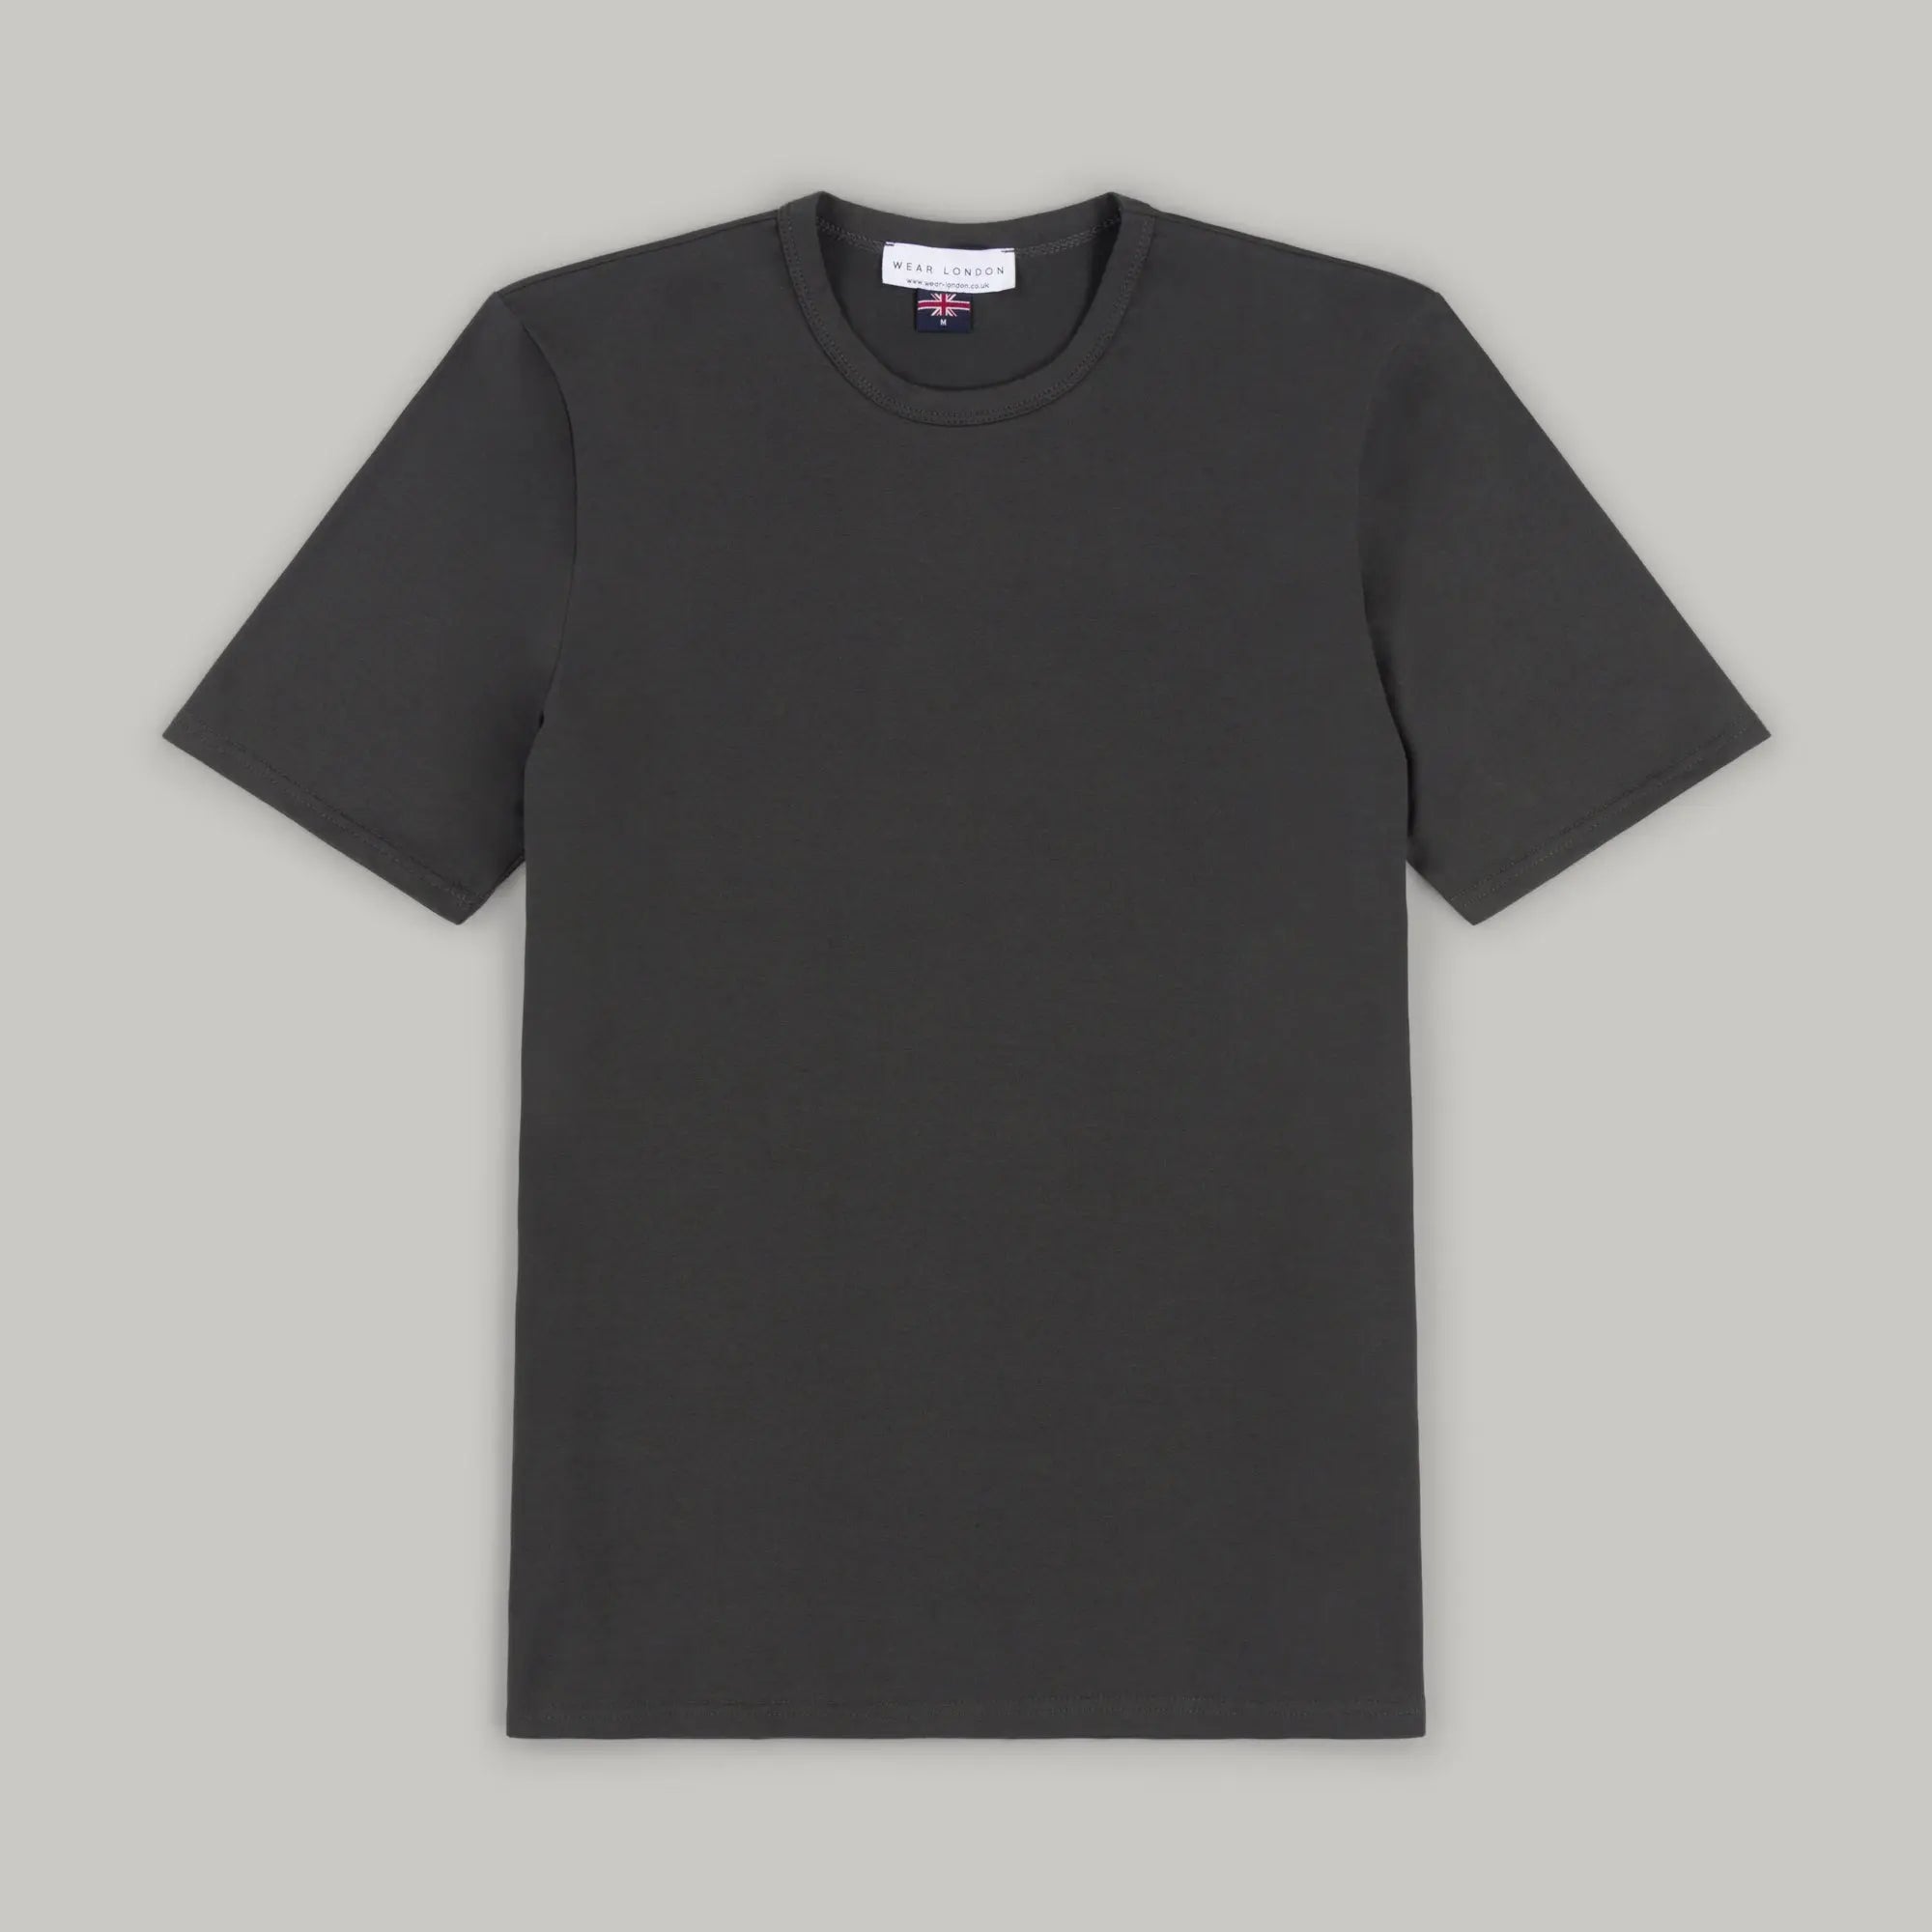 Trueman Short Sleeve Tee Shirt - Grey